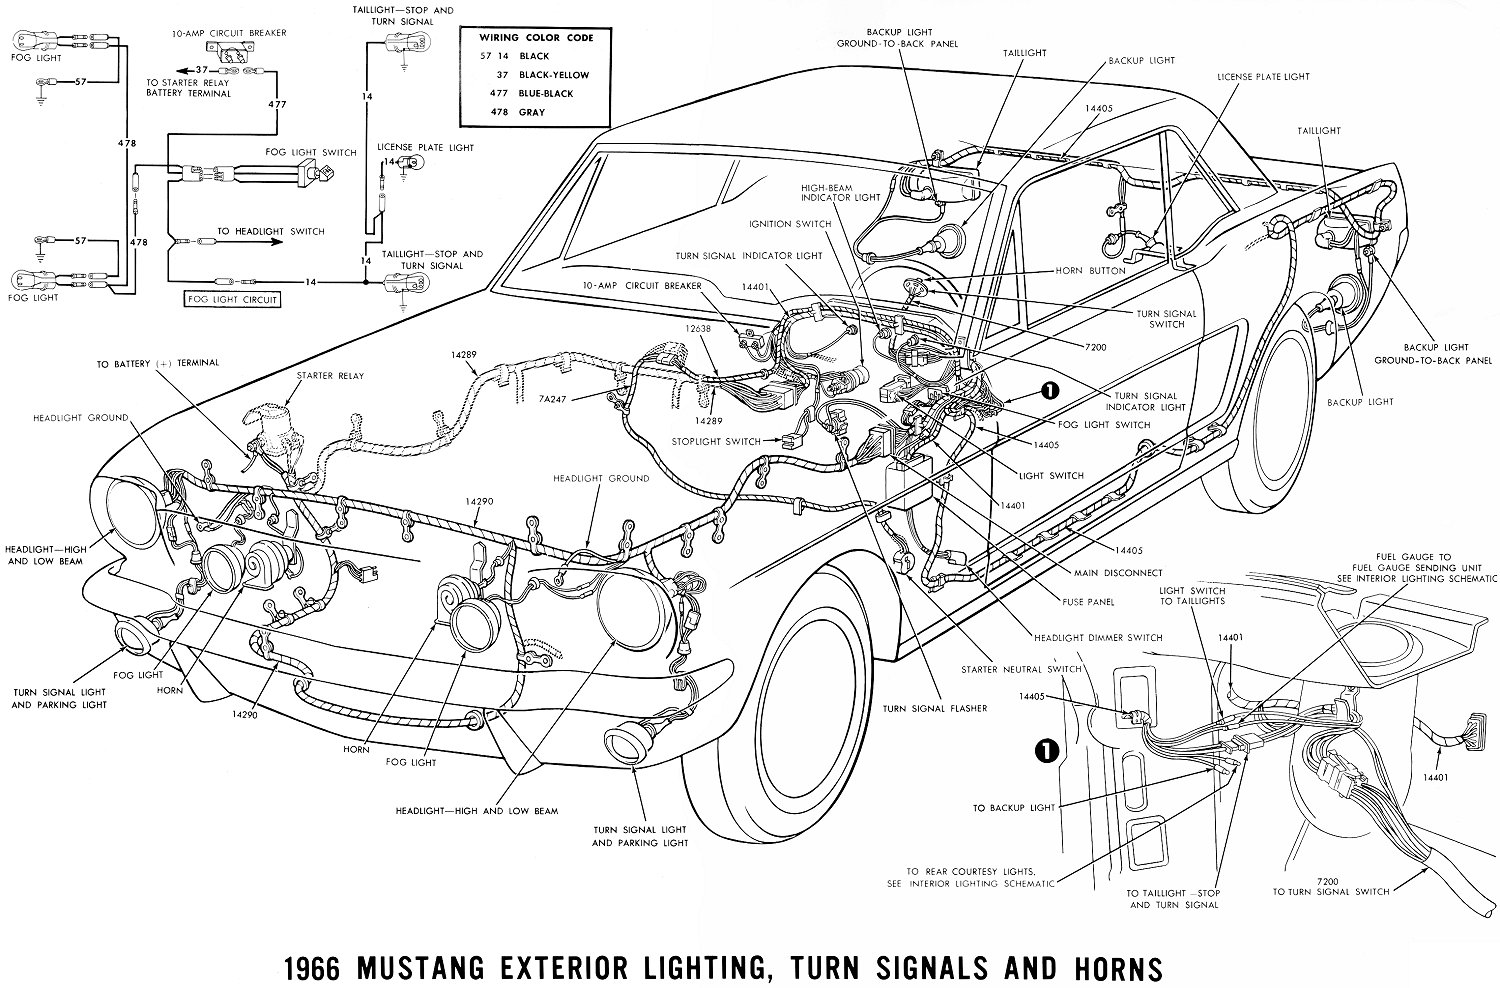 '67 Mustang - GT foglamp install - Vintage Mustang Forums